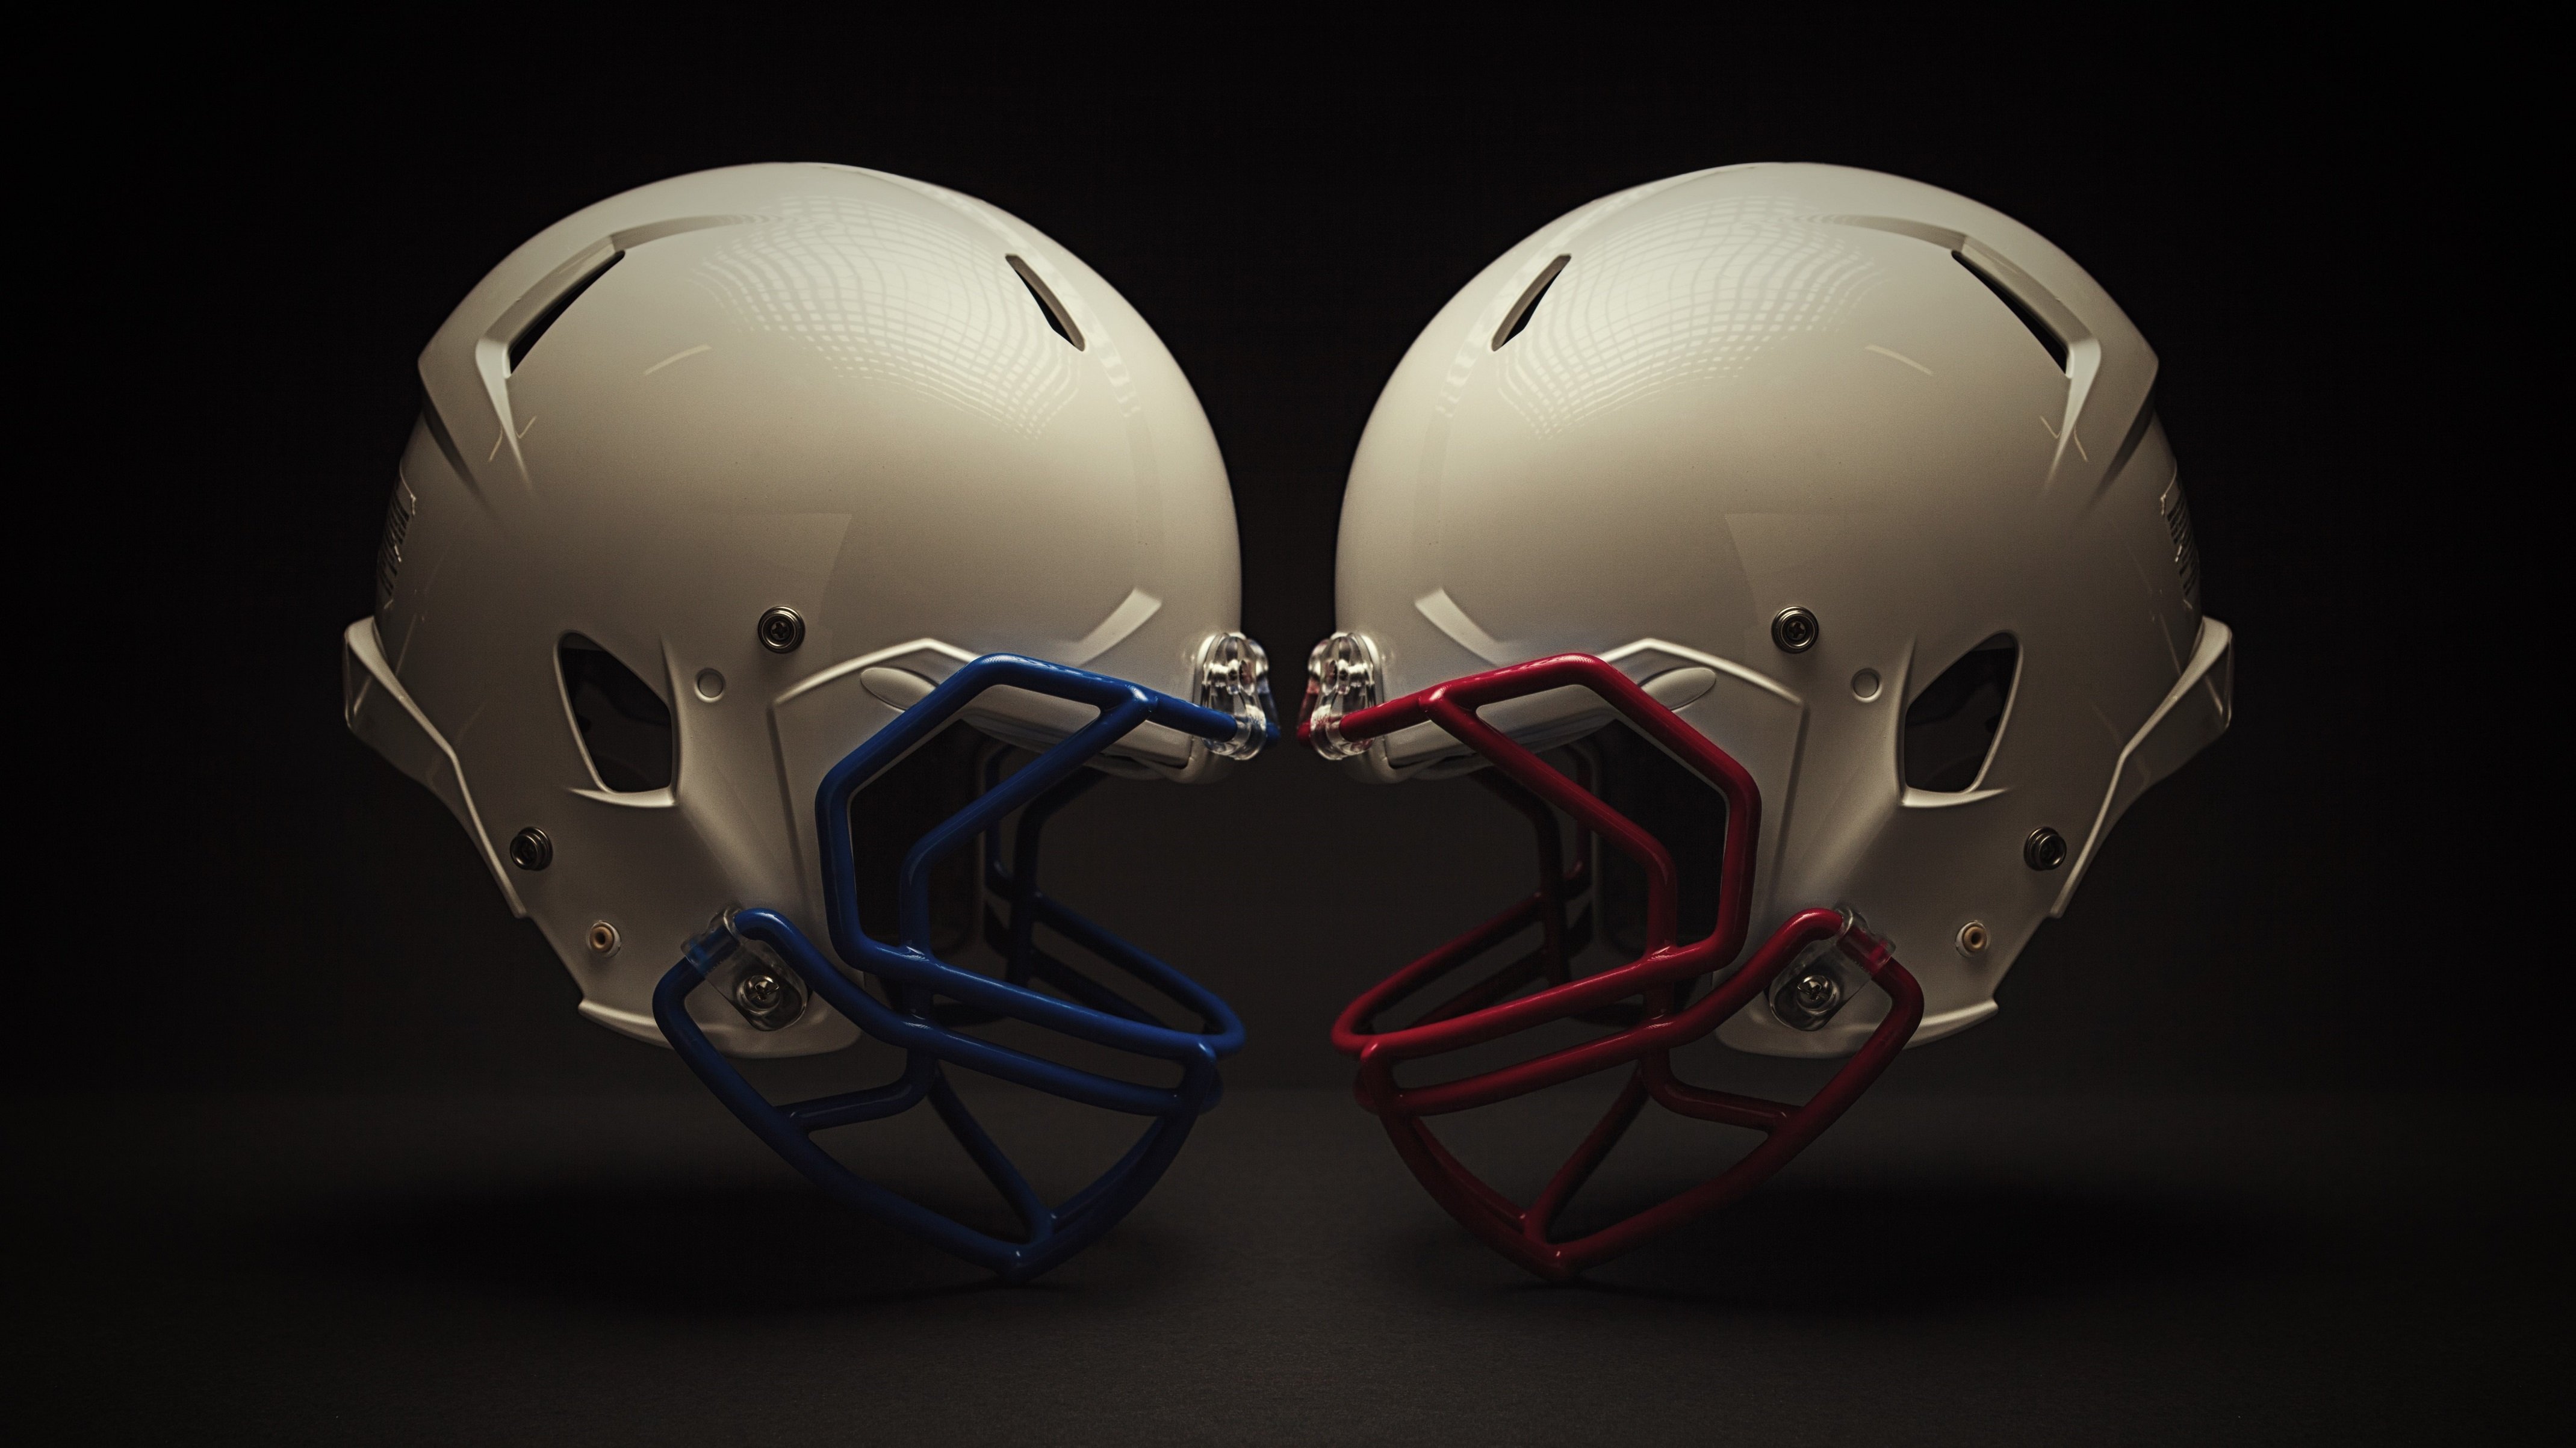 head to head against clash football helmets fight combat